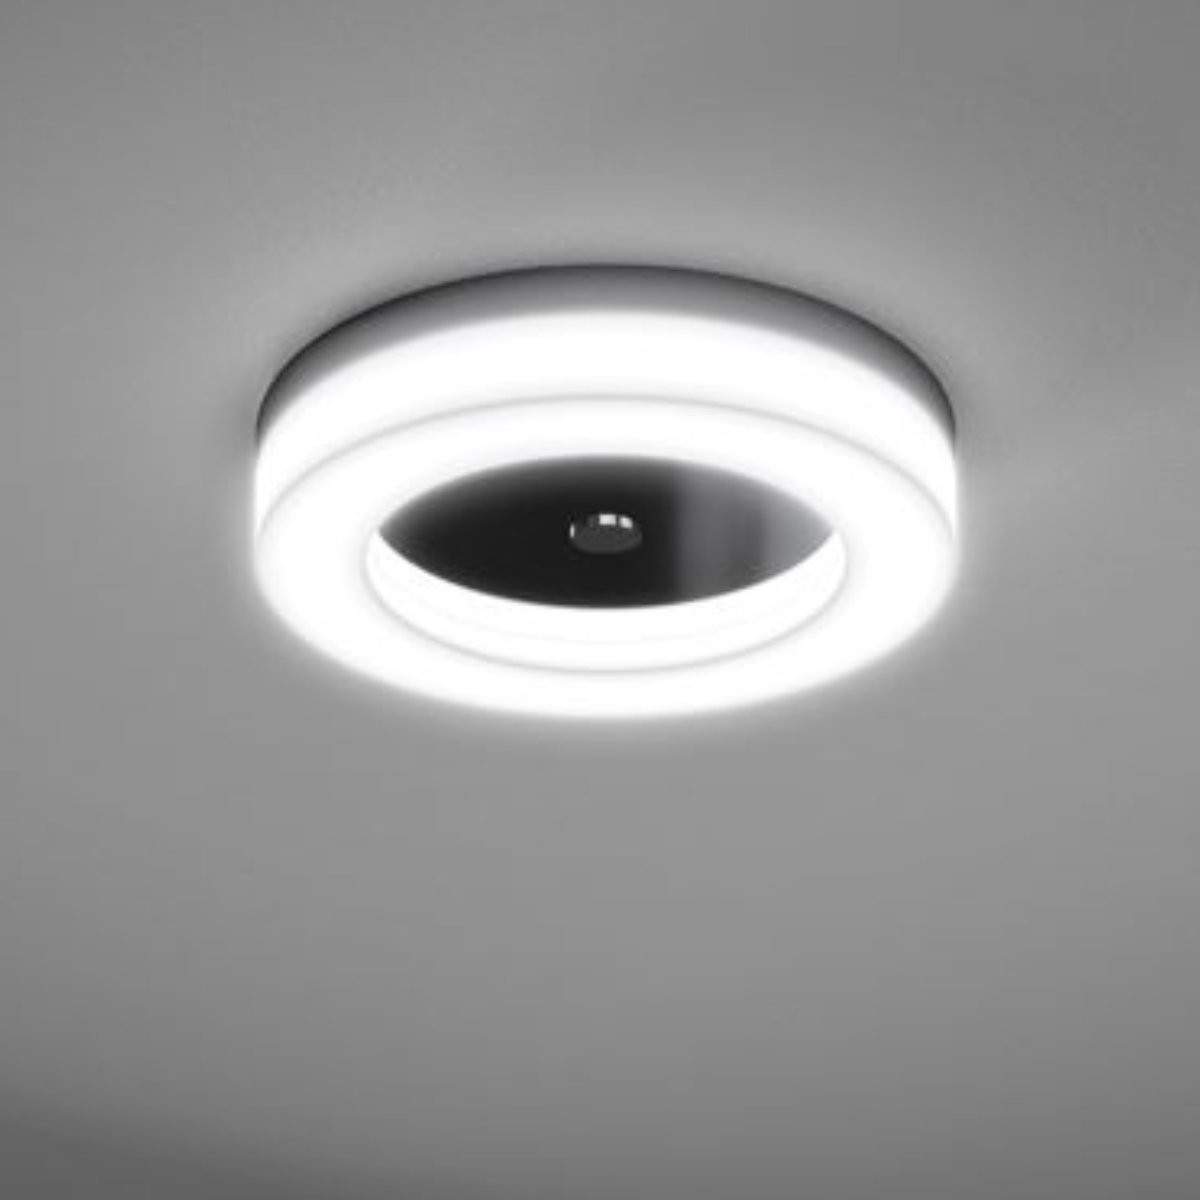 Hib Polar Led Bathroom Ceiling Light, Fluorescent Bathroom Ceiling Light Fixtures